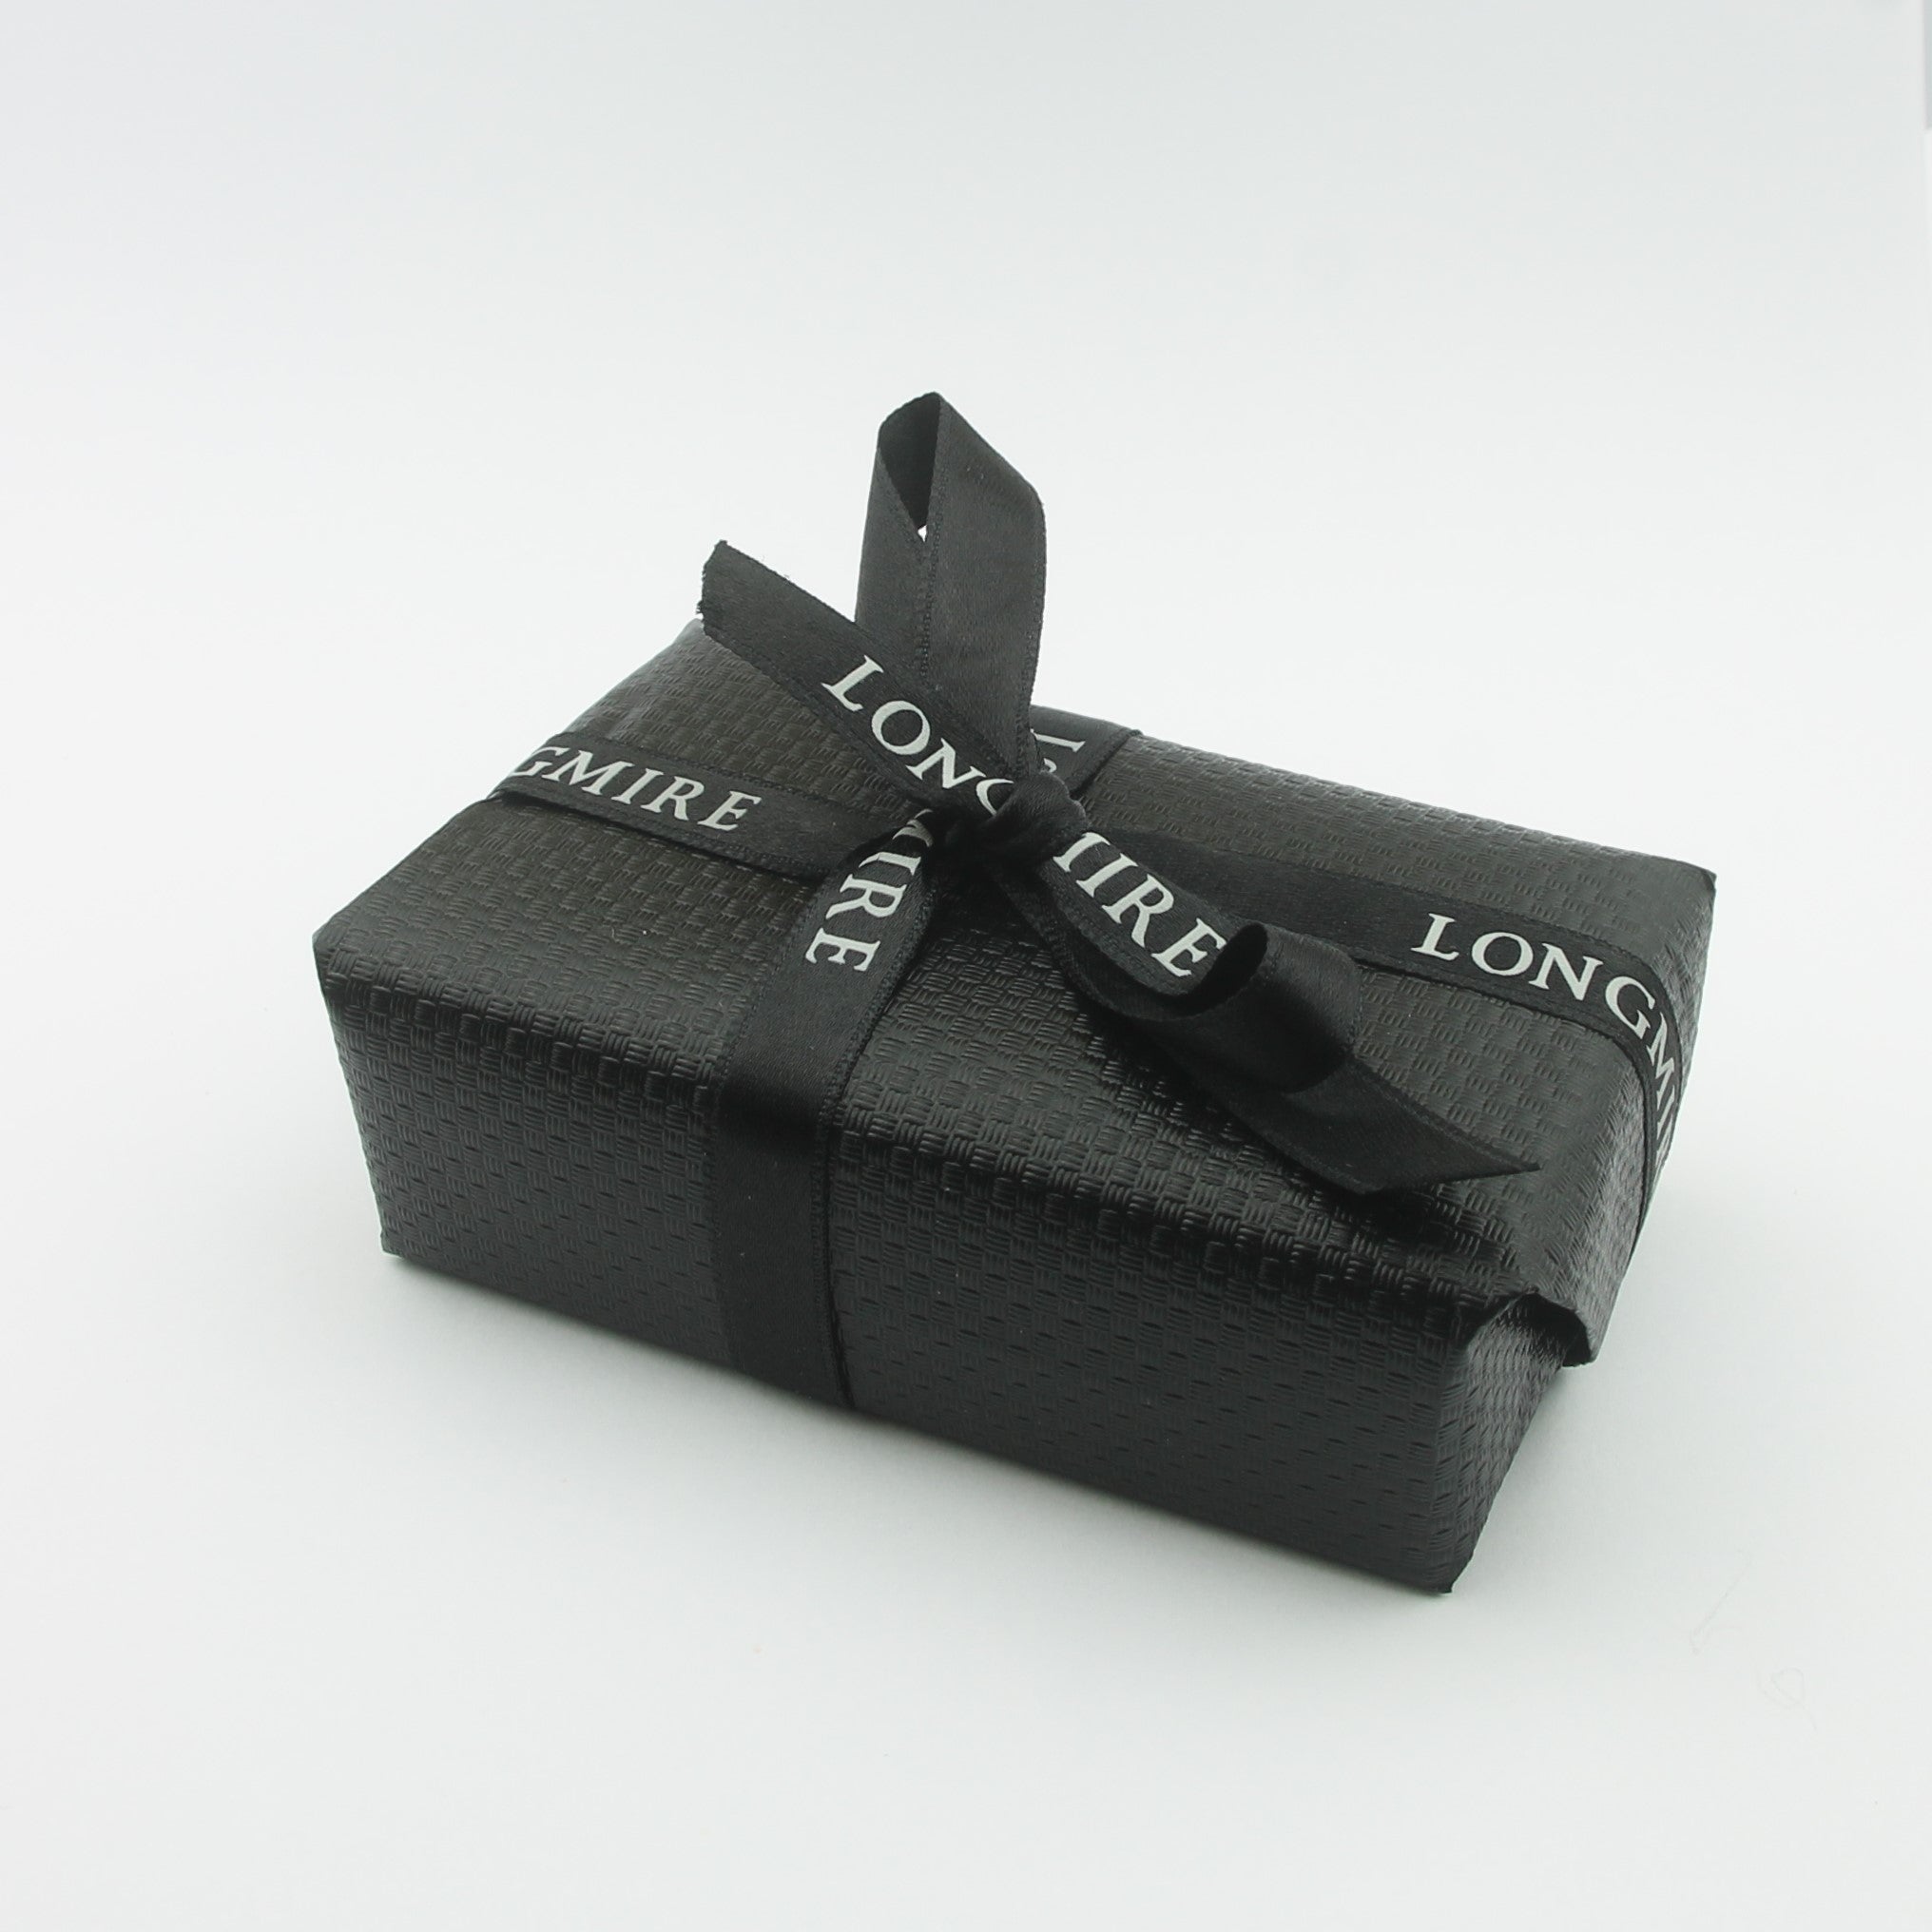 Longmire gift wrapped box